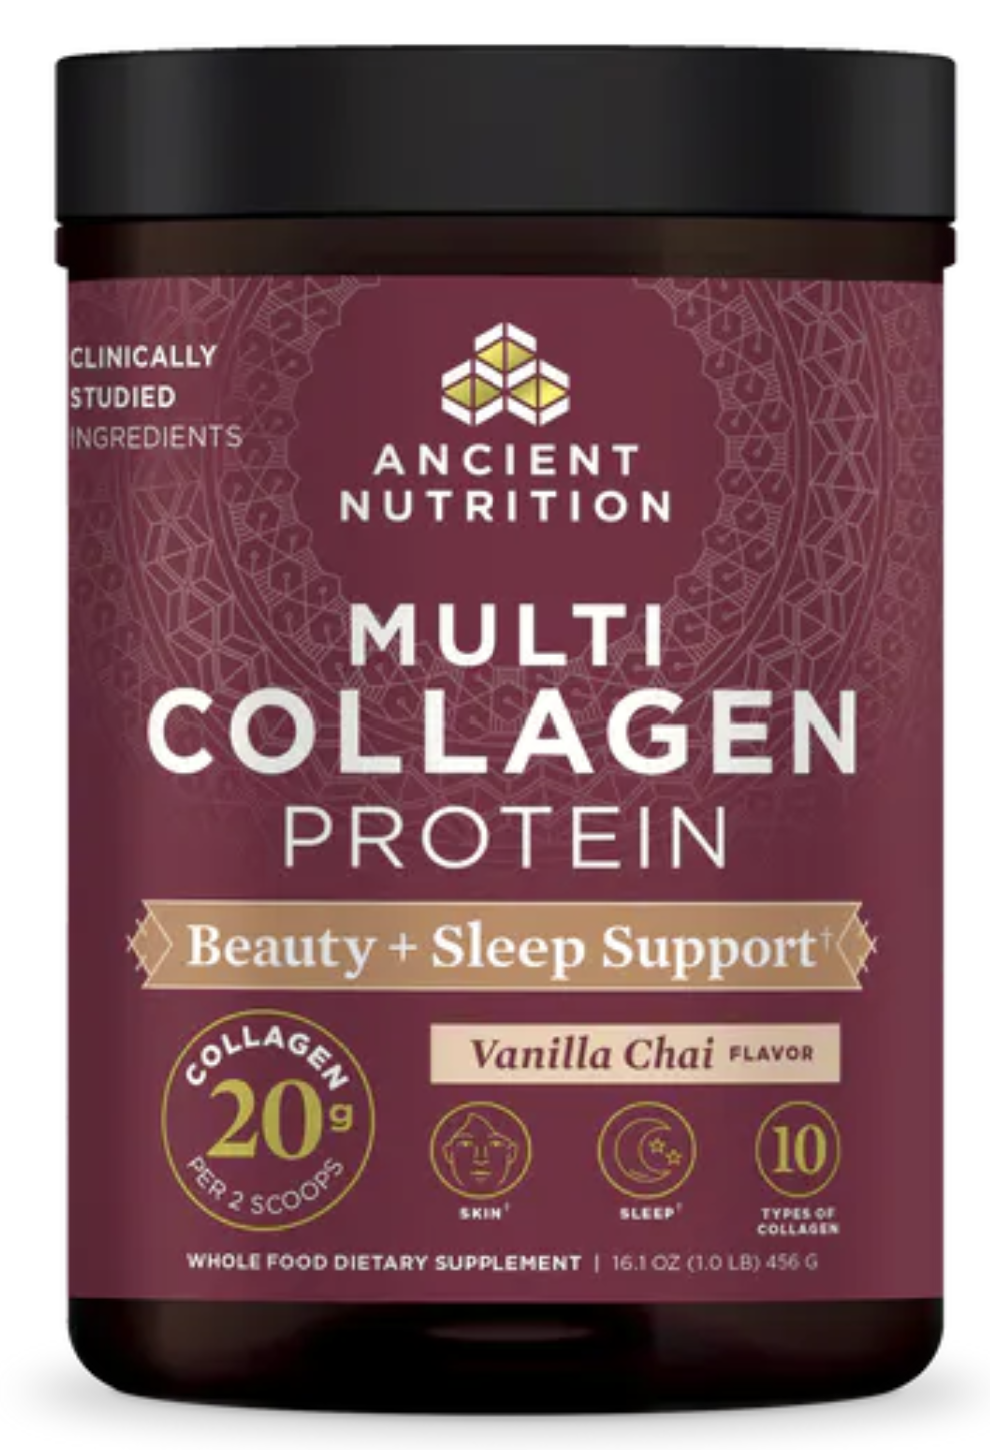 Ancient Nutrition Beauty +Sleep Support Vanilla Chai 16.1oz